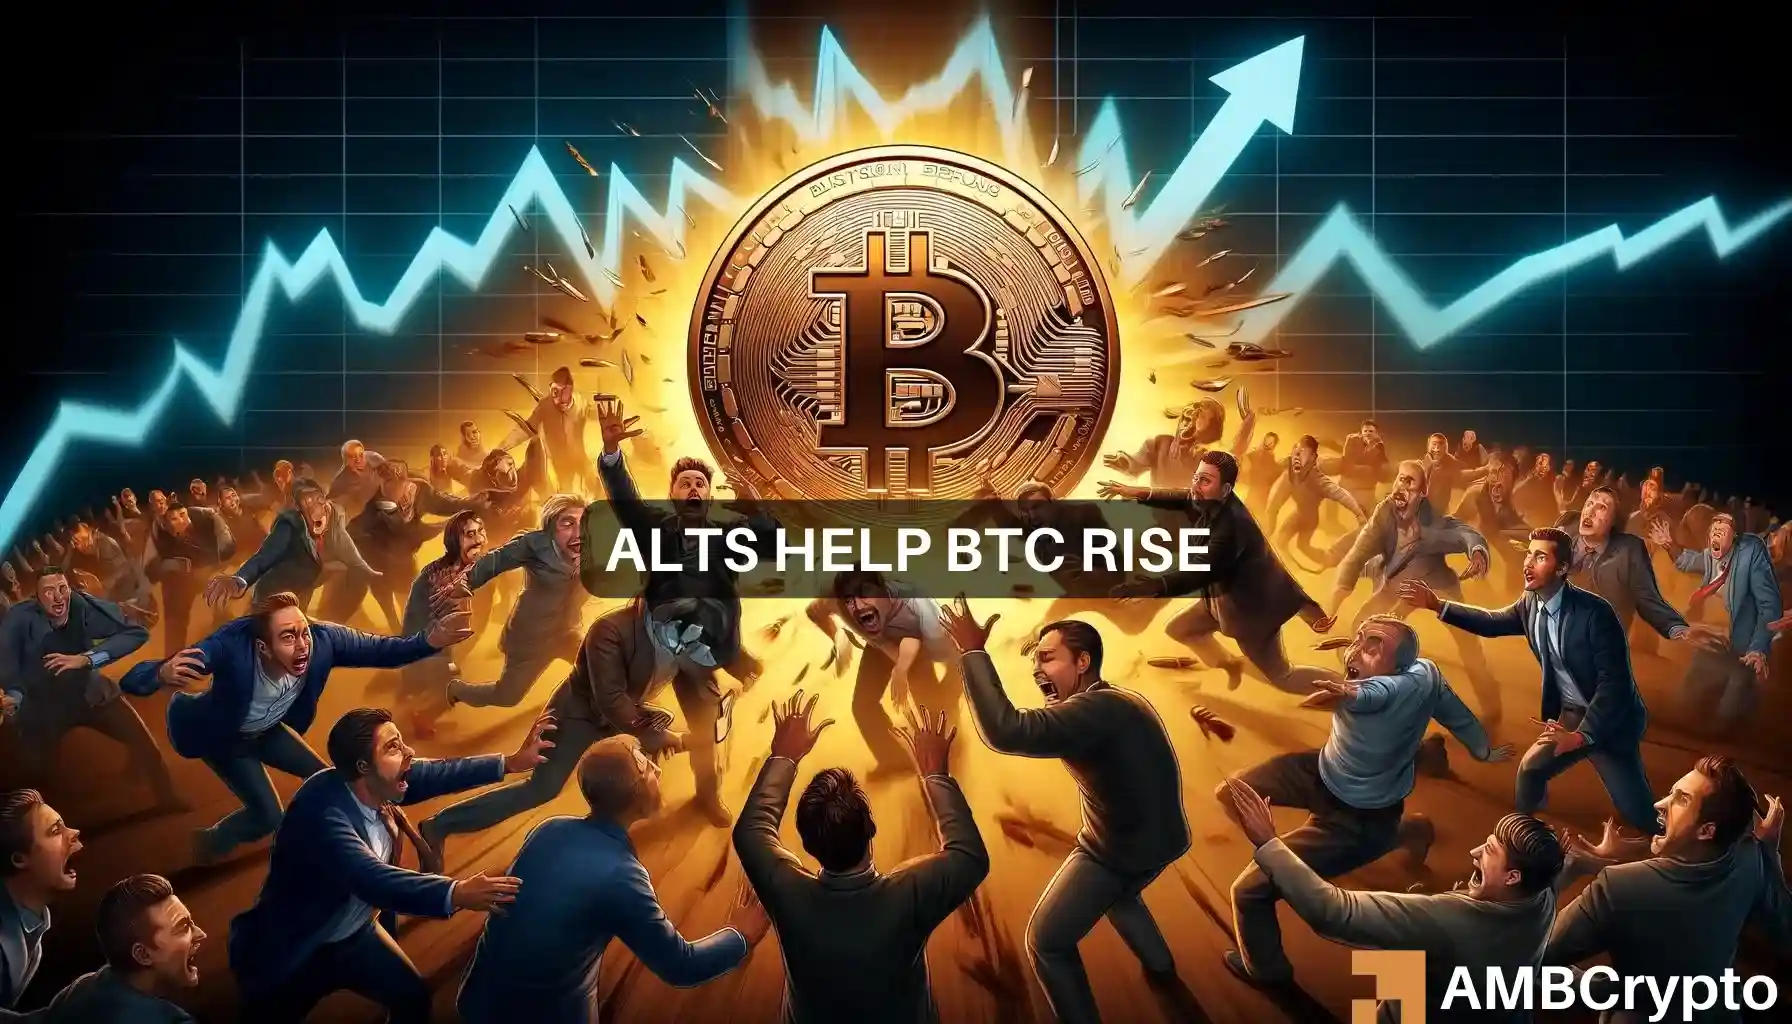 Bitcoin dominance is rising